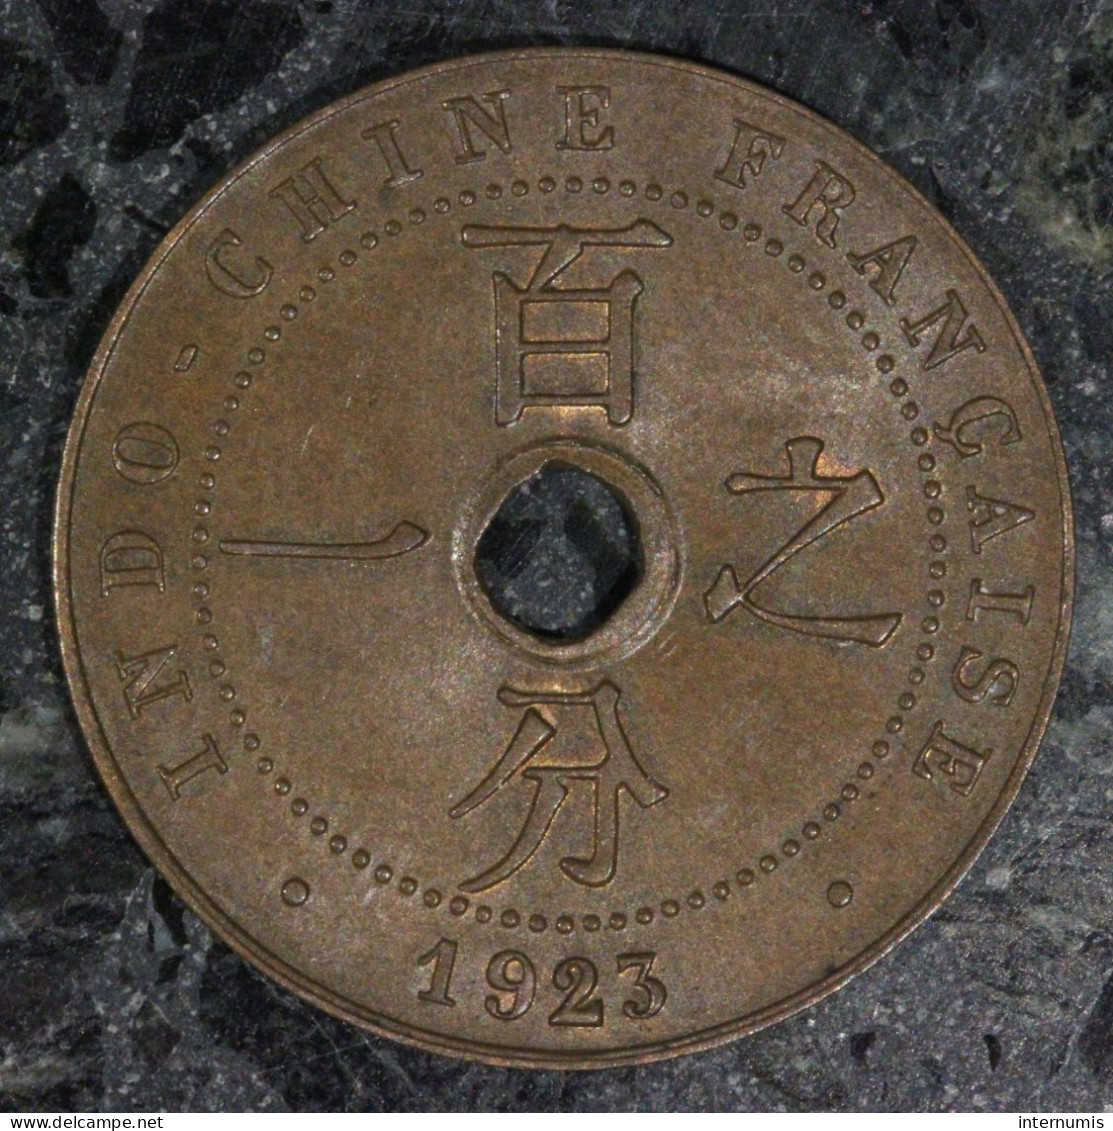  Indochine / Indochina, , 1 Centième / 1 Cent, 1923, Poissy, Bronze, SPL (UNC),
KM#12.1, Lec.92 - French Indochina